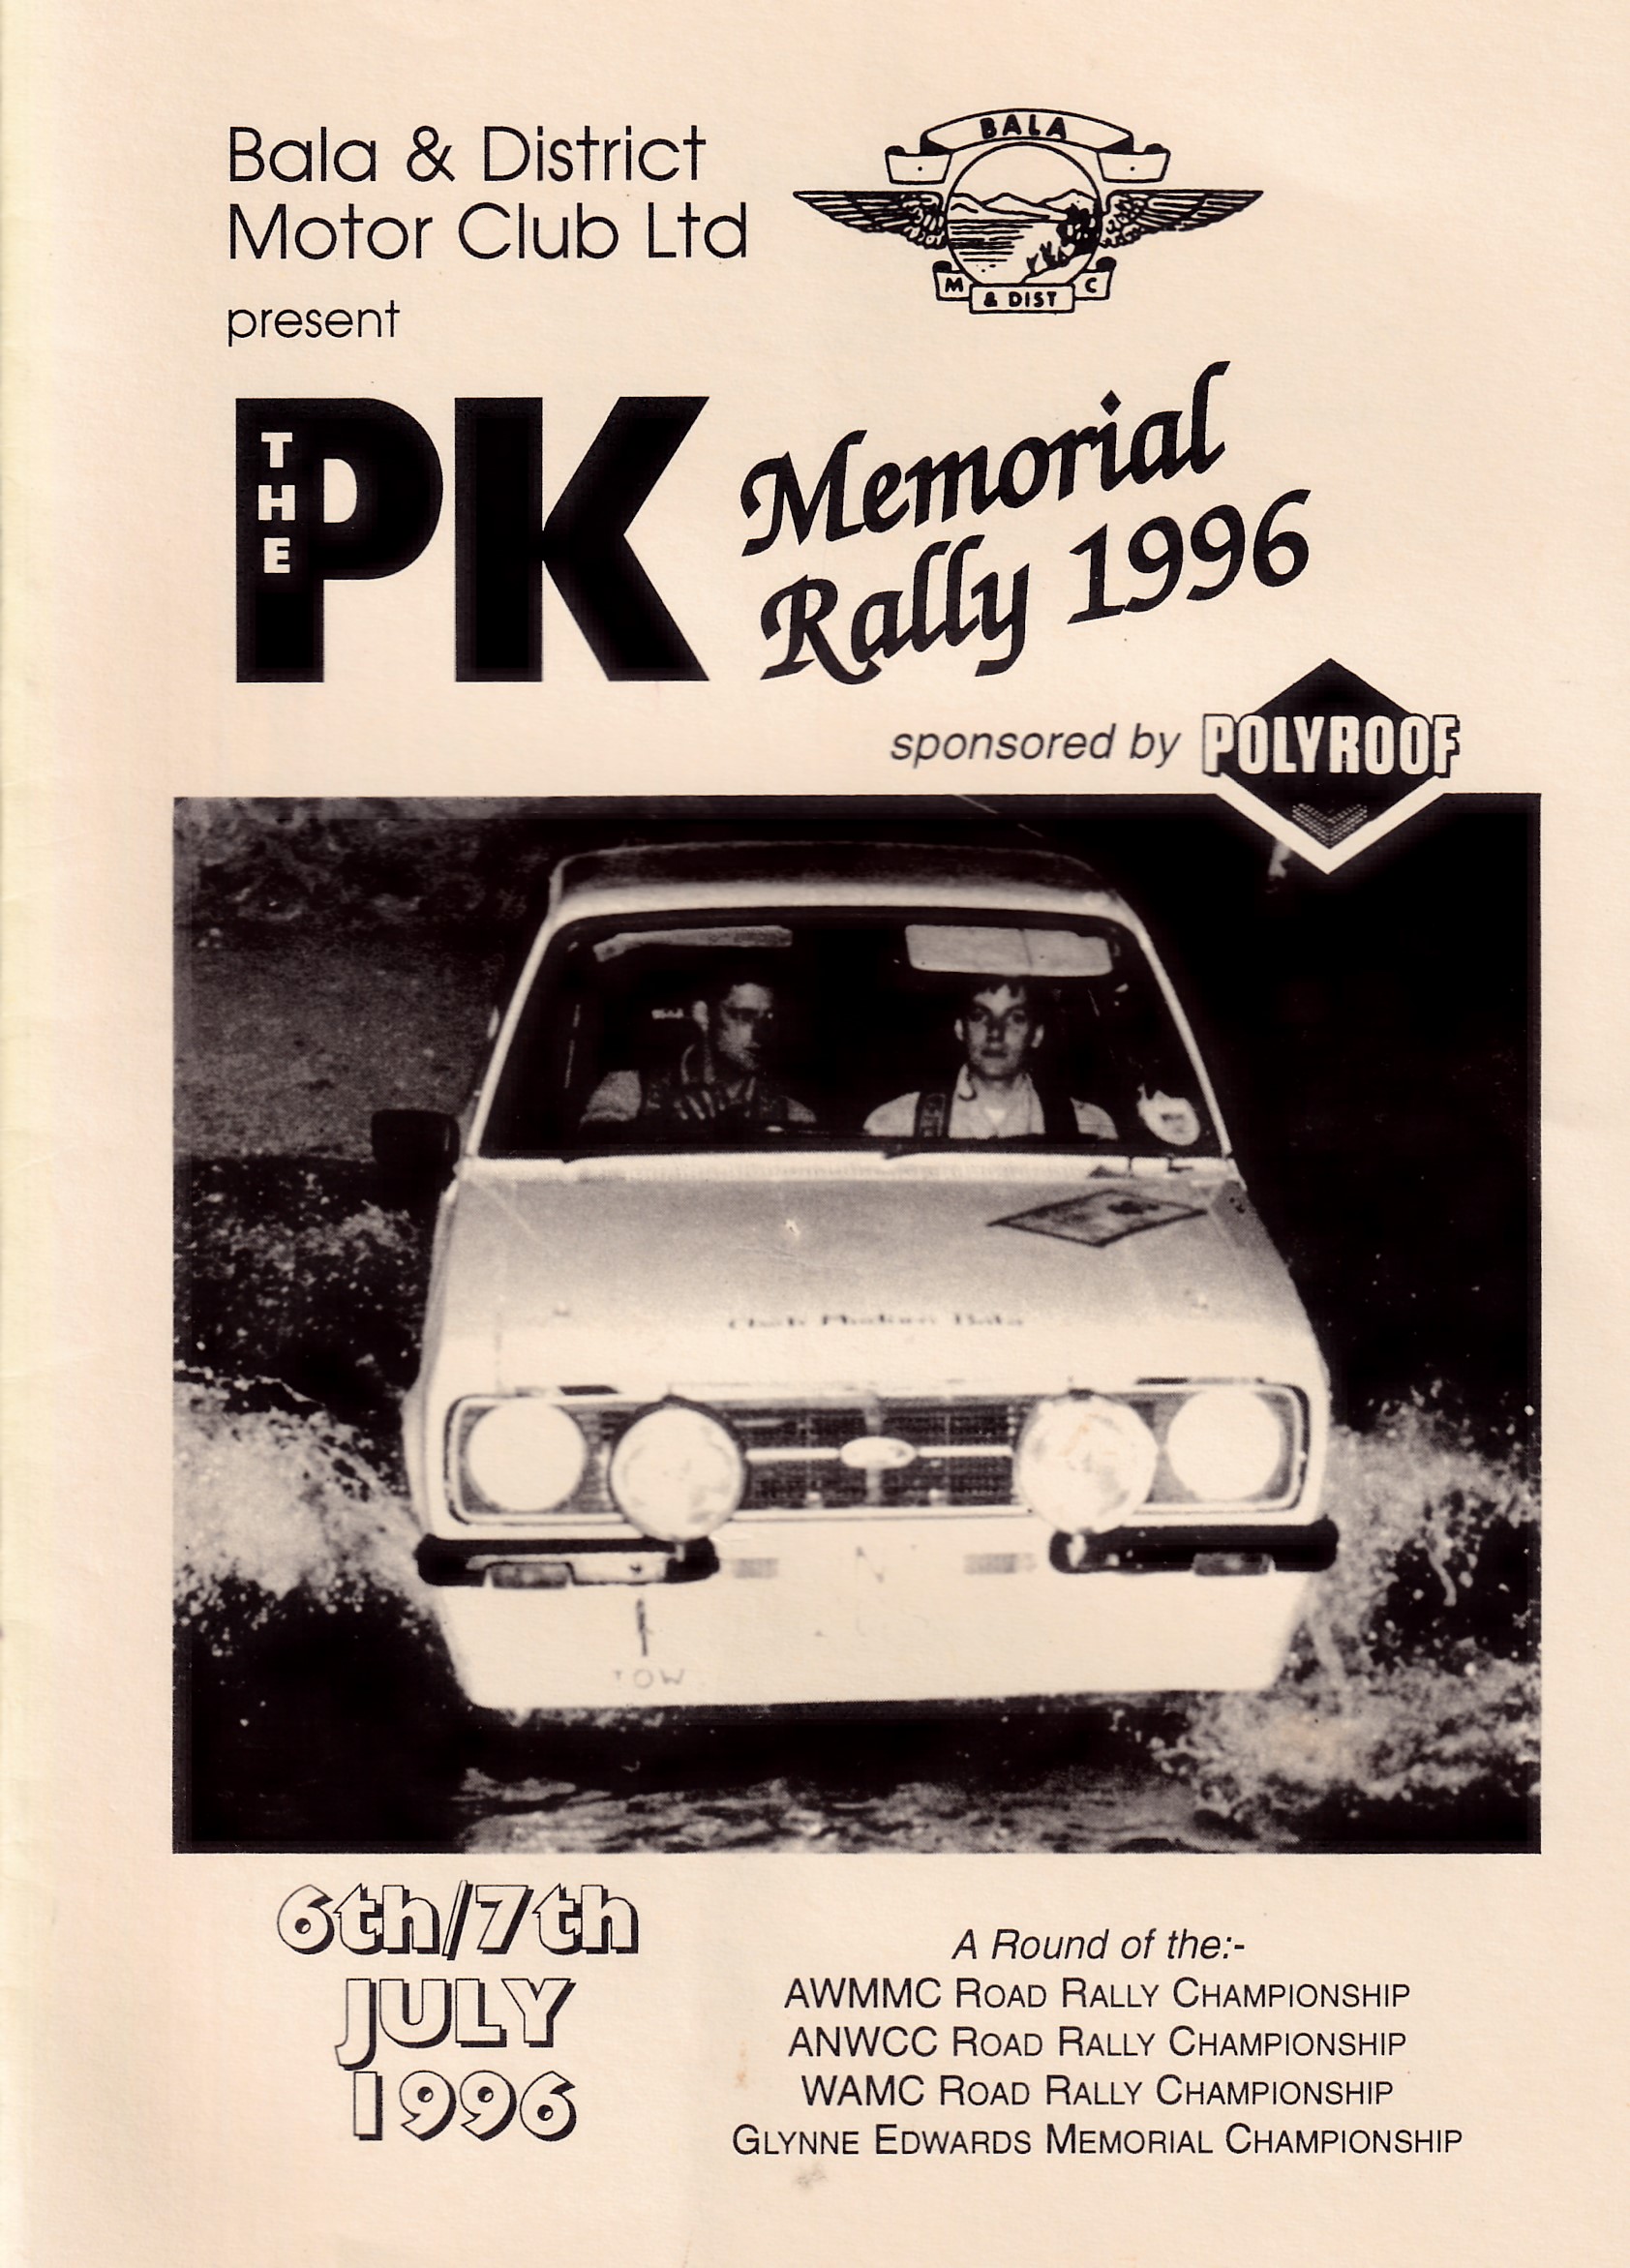 PK Memorial Rally 1996